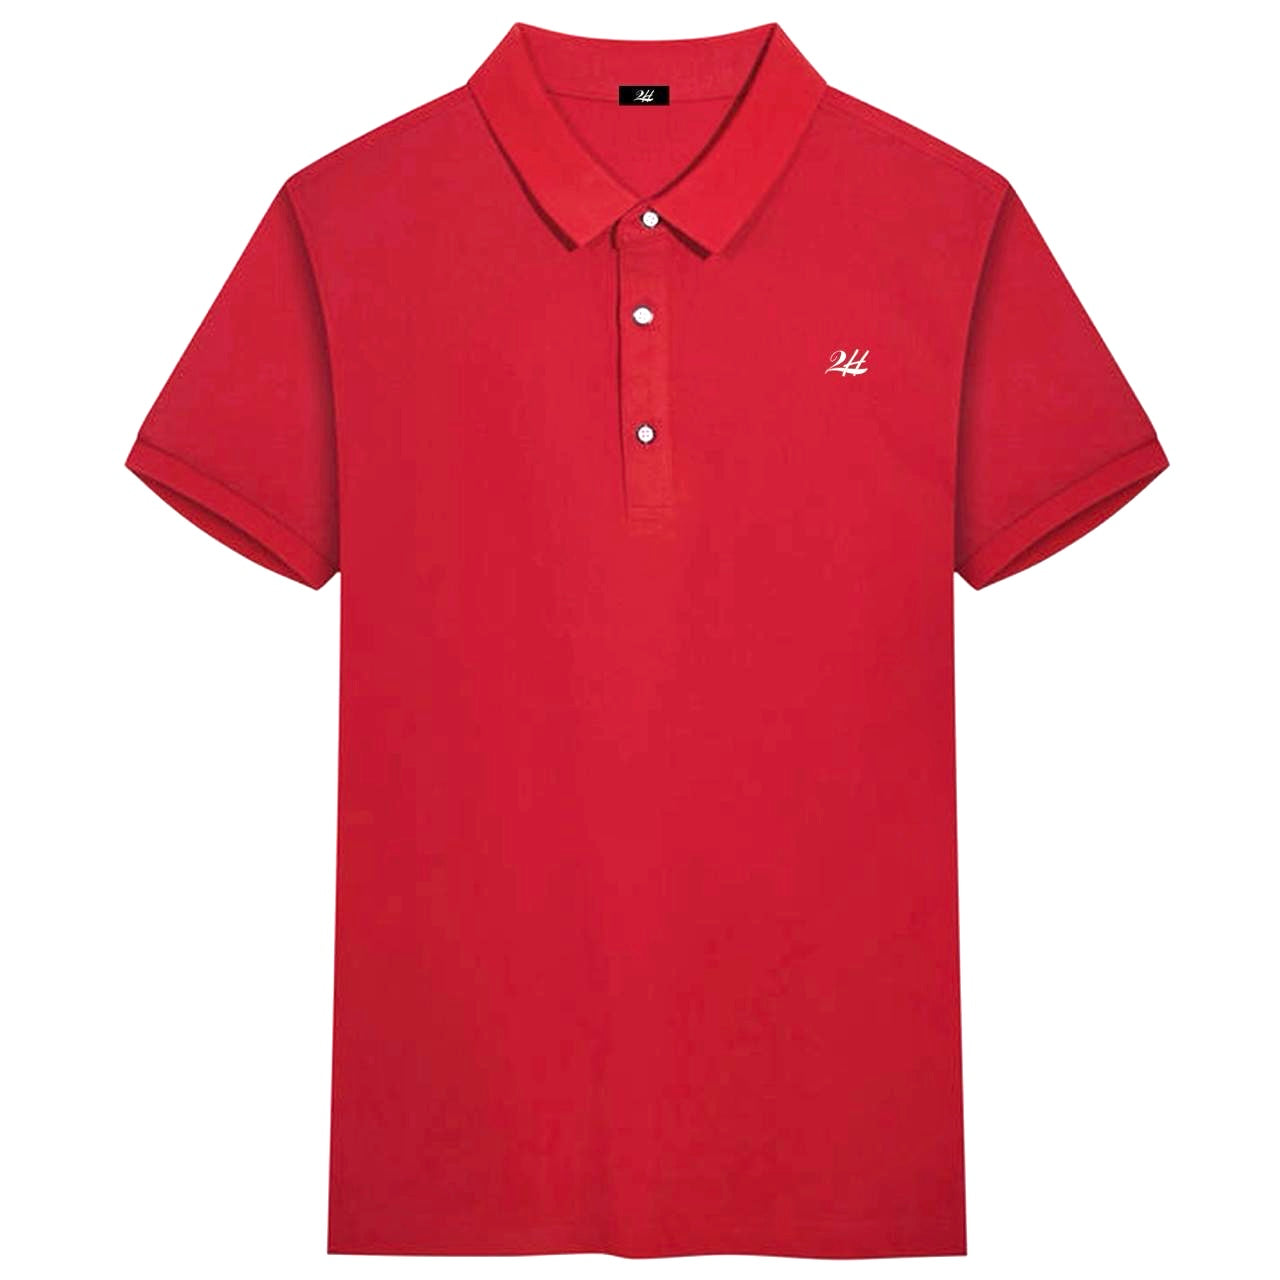 2H #CX.2101 Red Polo T-shirt